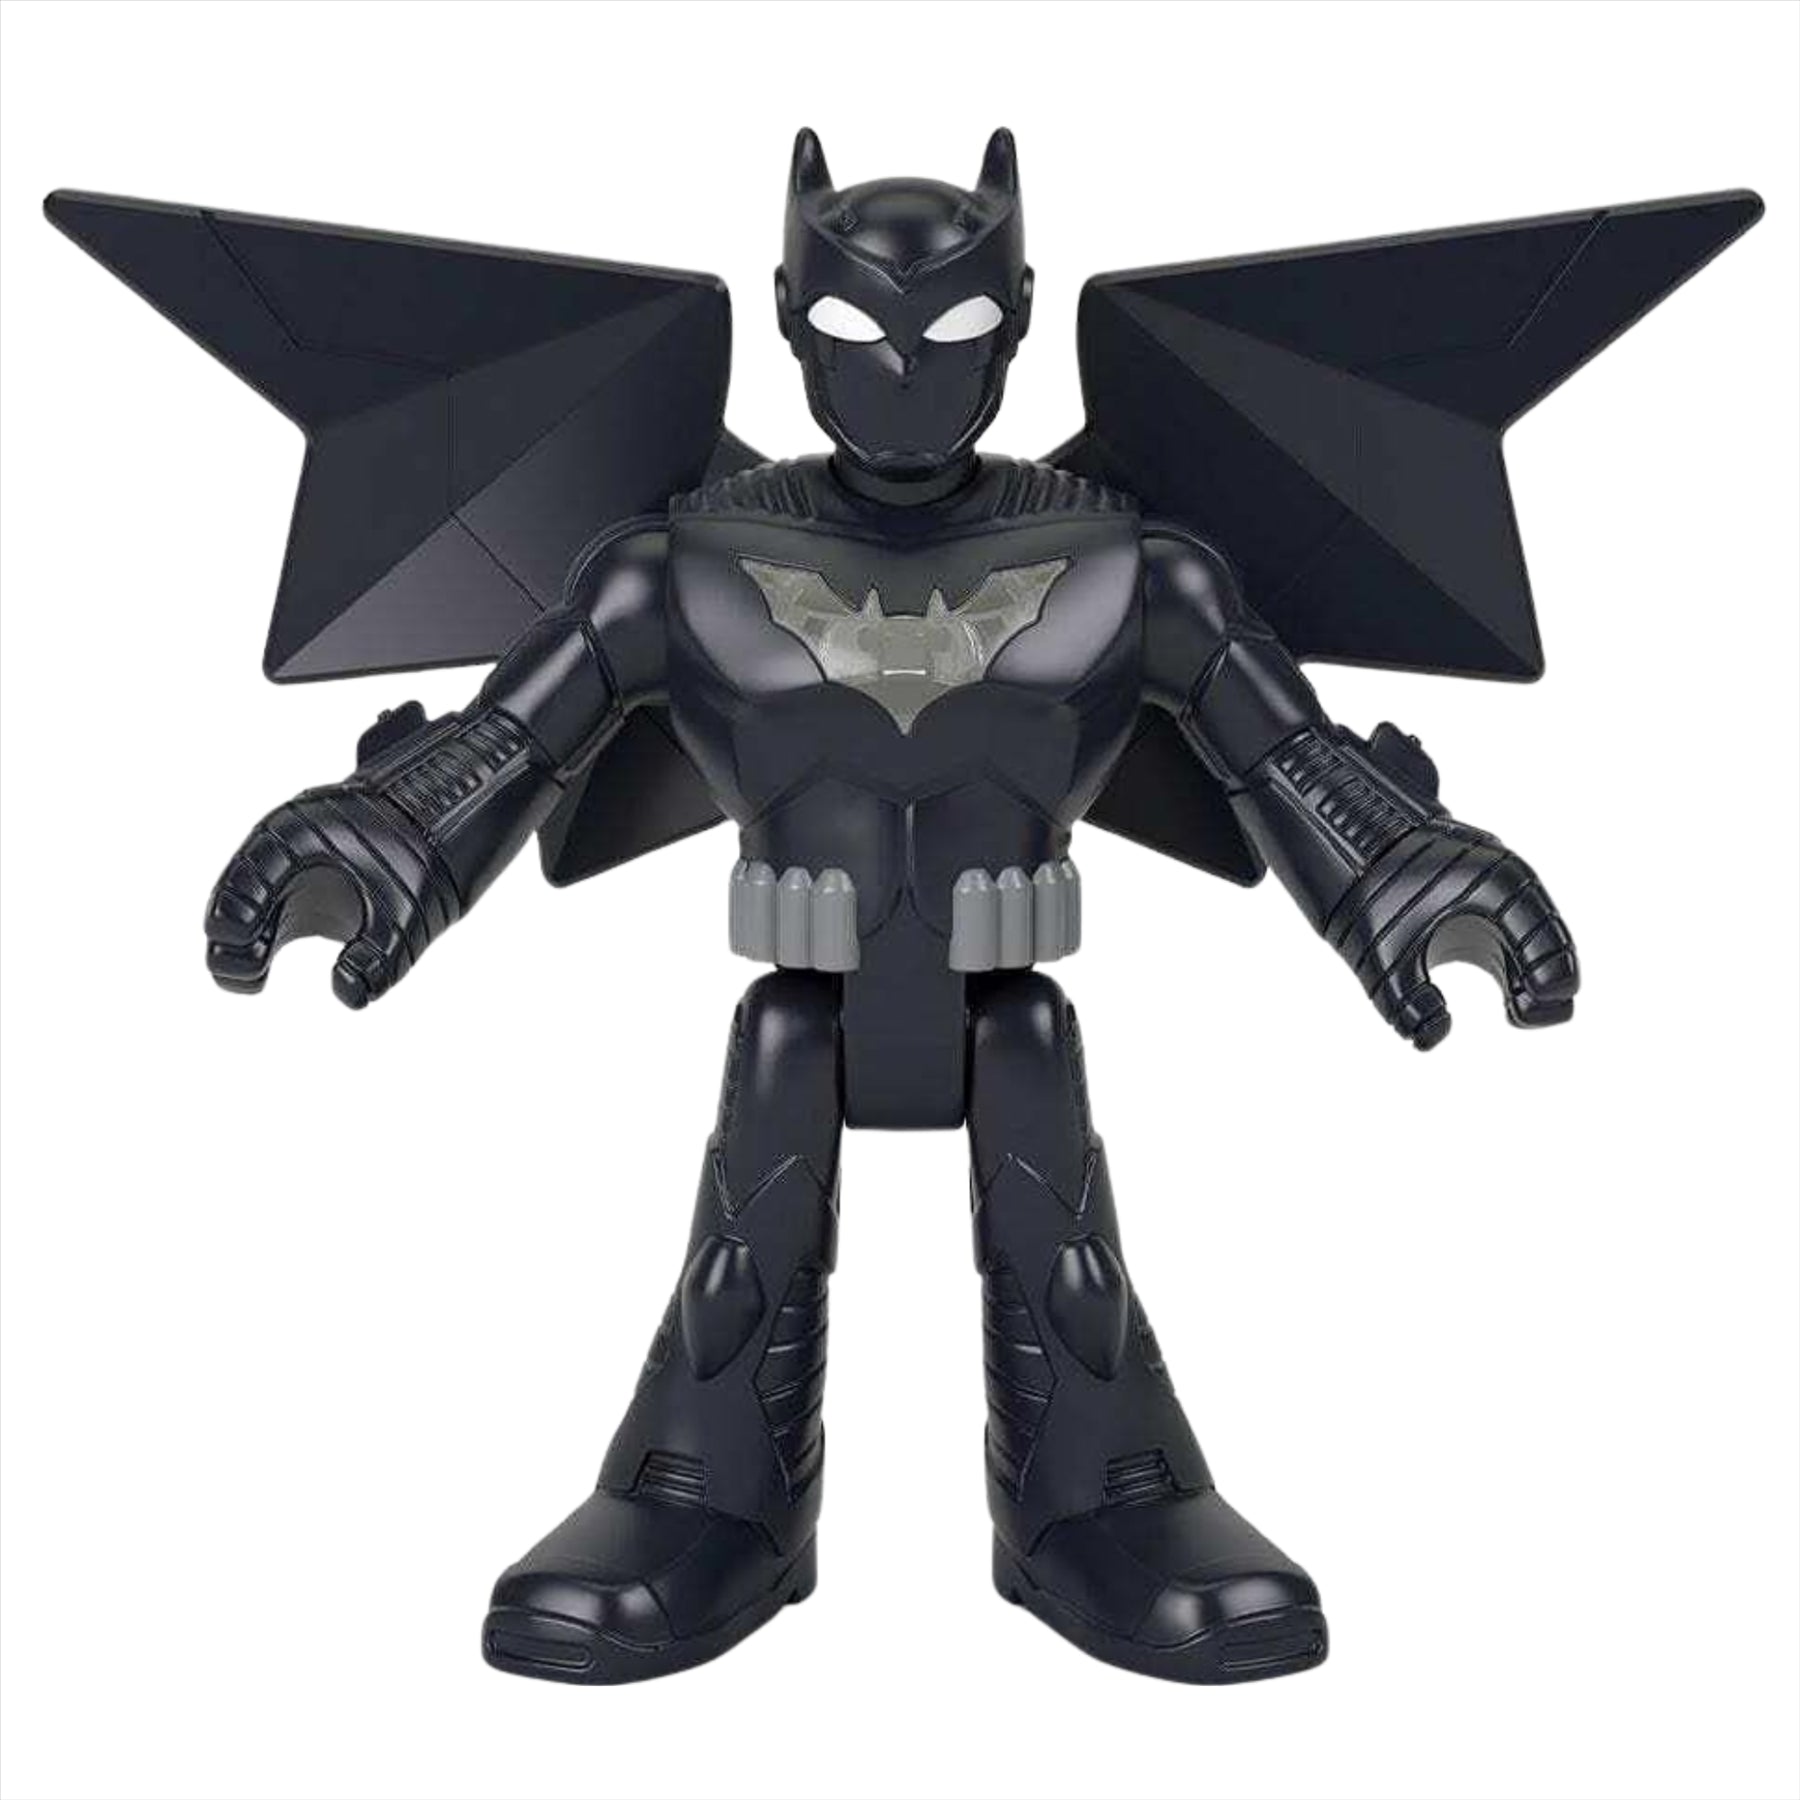 Imaginext DC Super Friends Batwing Miniature Action Figure Play Toy